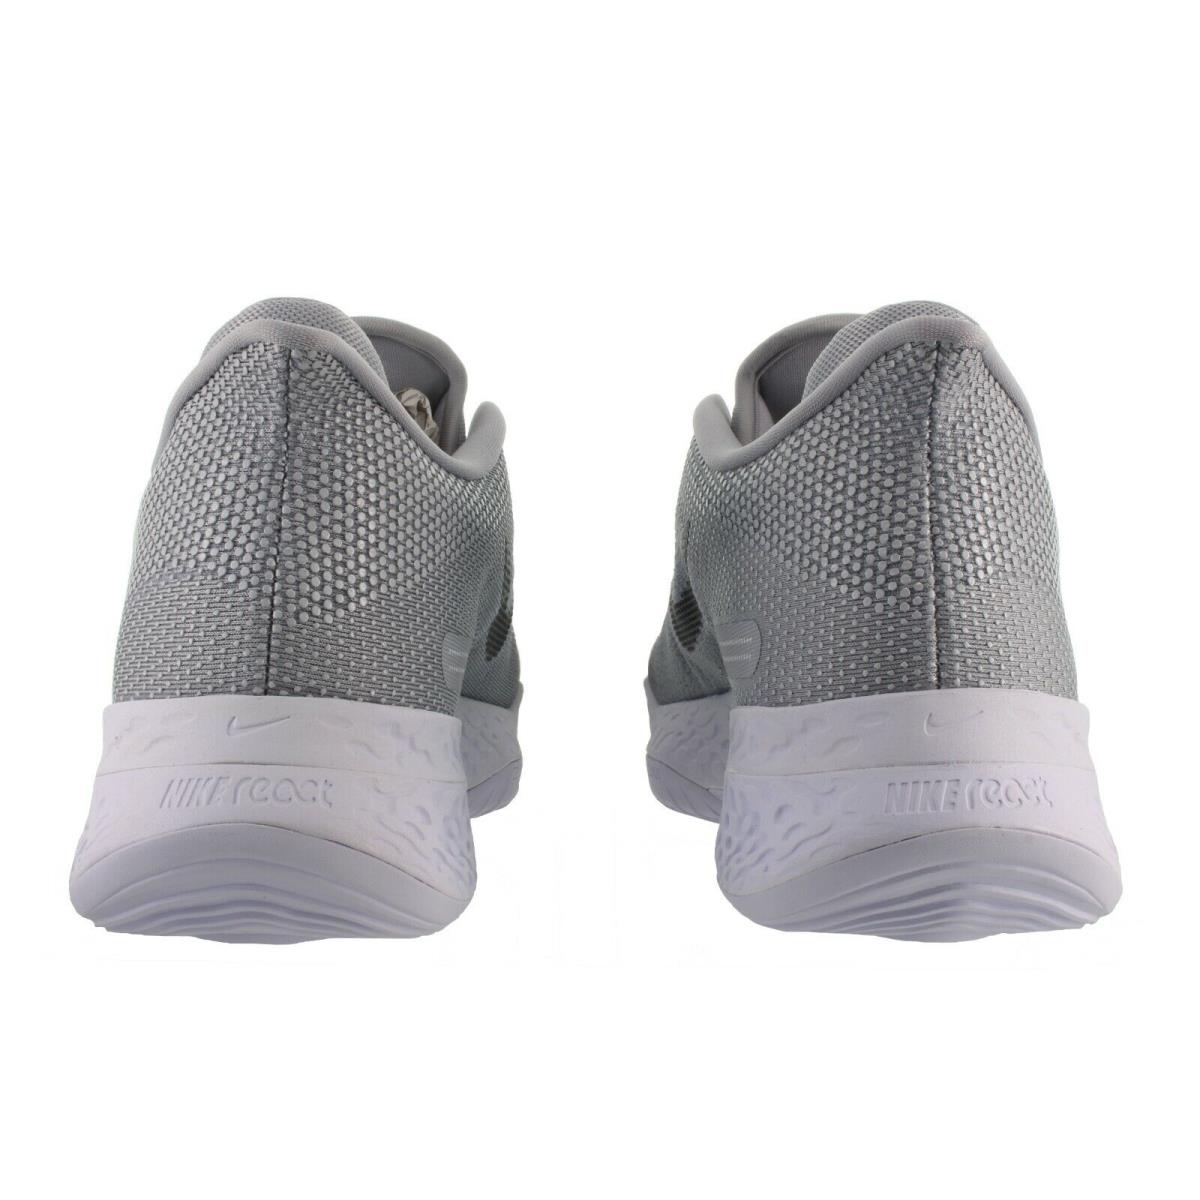 Nike shoes  - Wolf Grey, Black, White 2